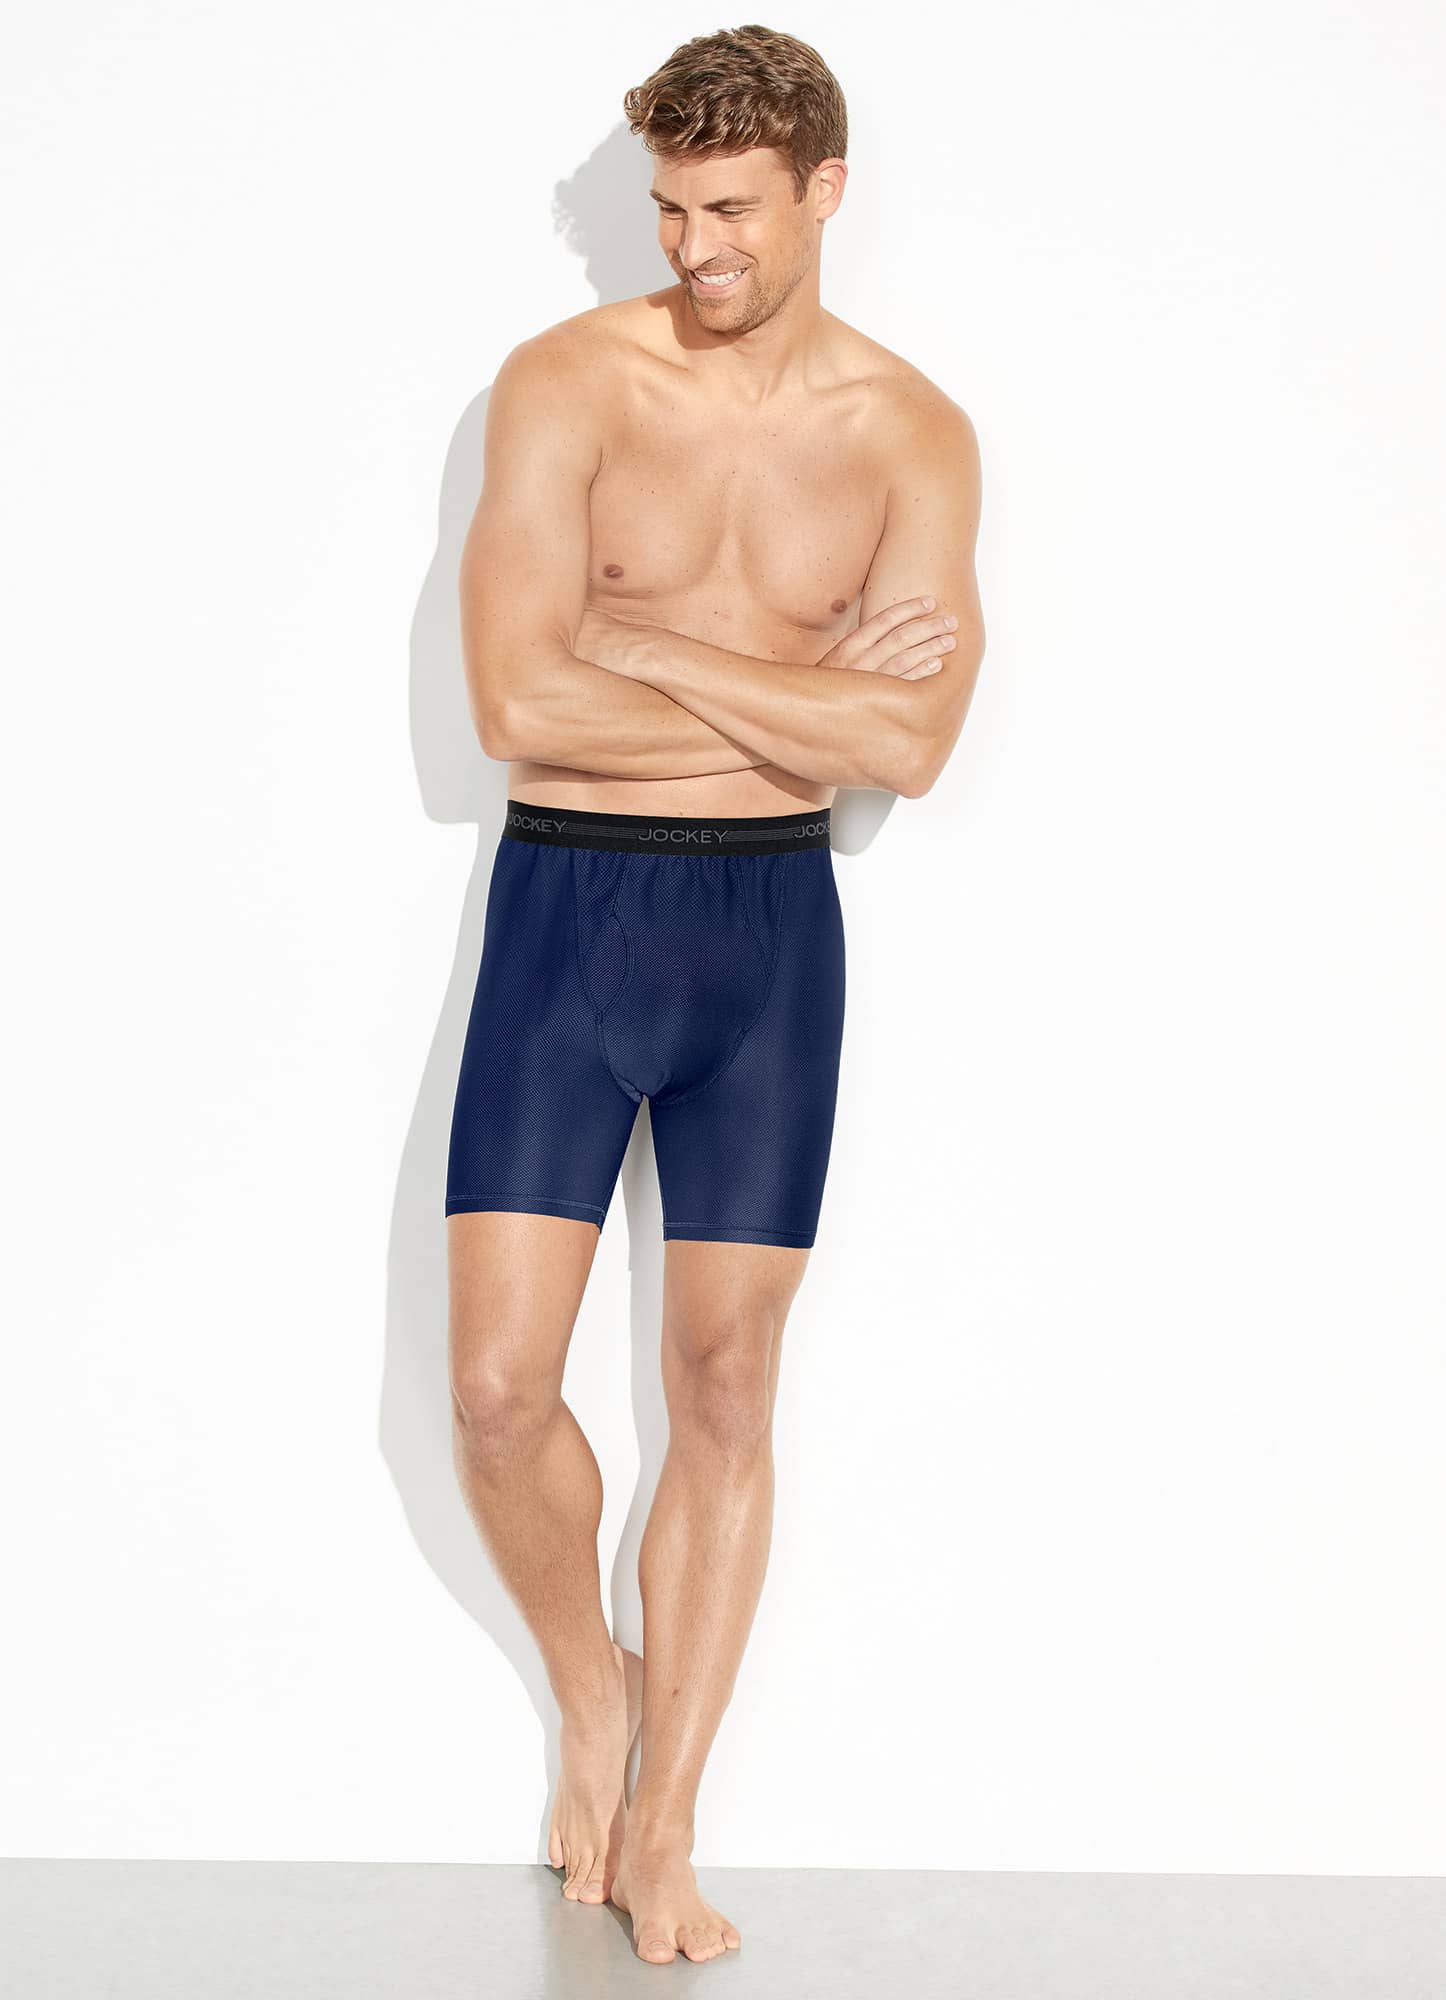 JINSHI Men's Underwear Extra Long Leg Boxer Briefs Inseam 8-9 Performance  Boxe